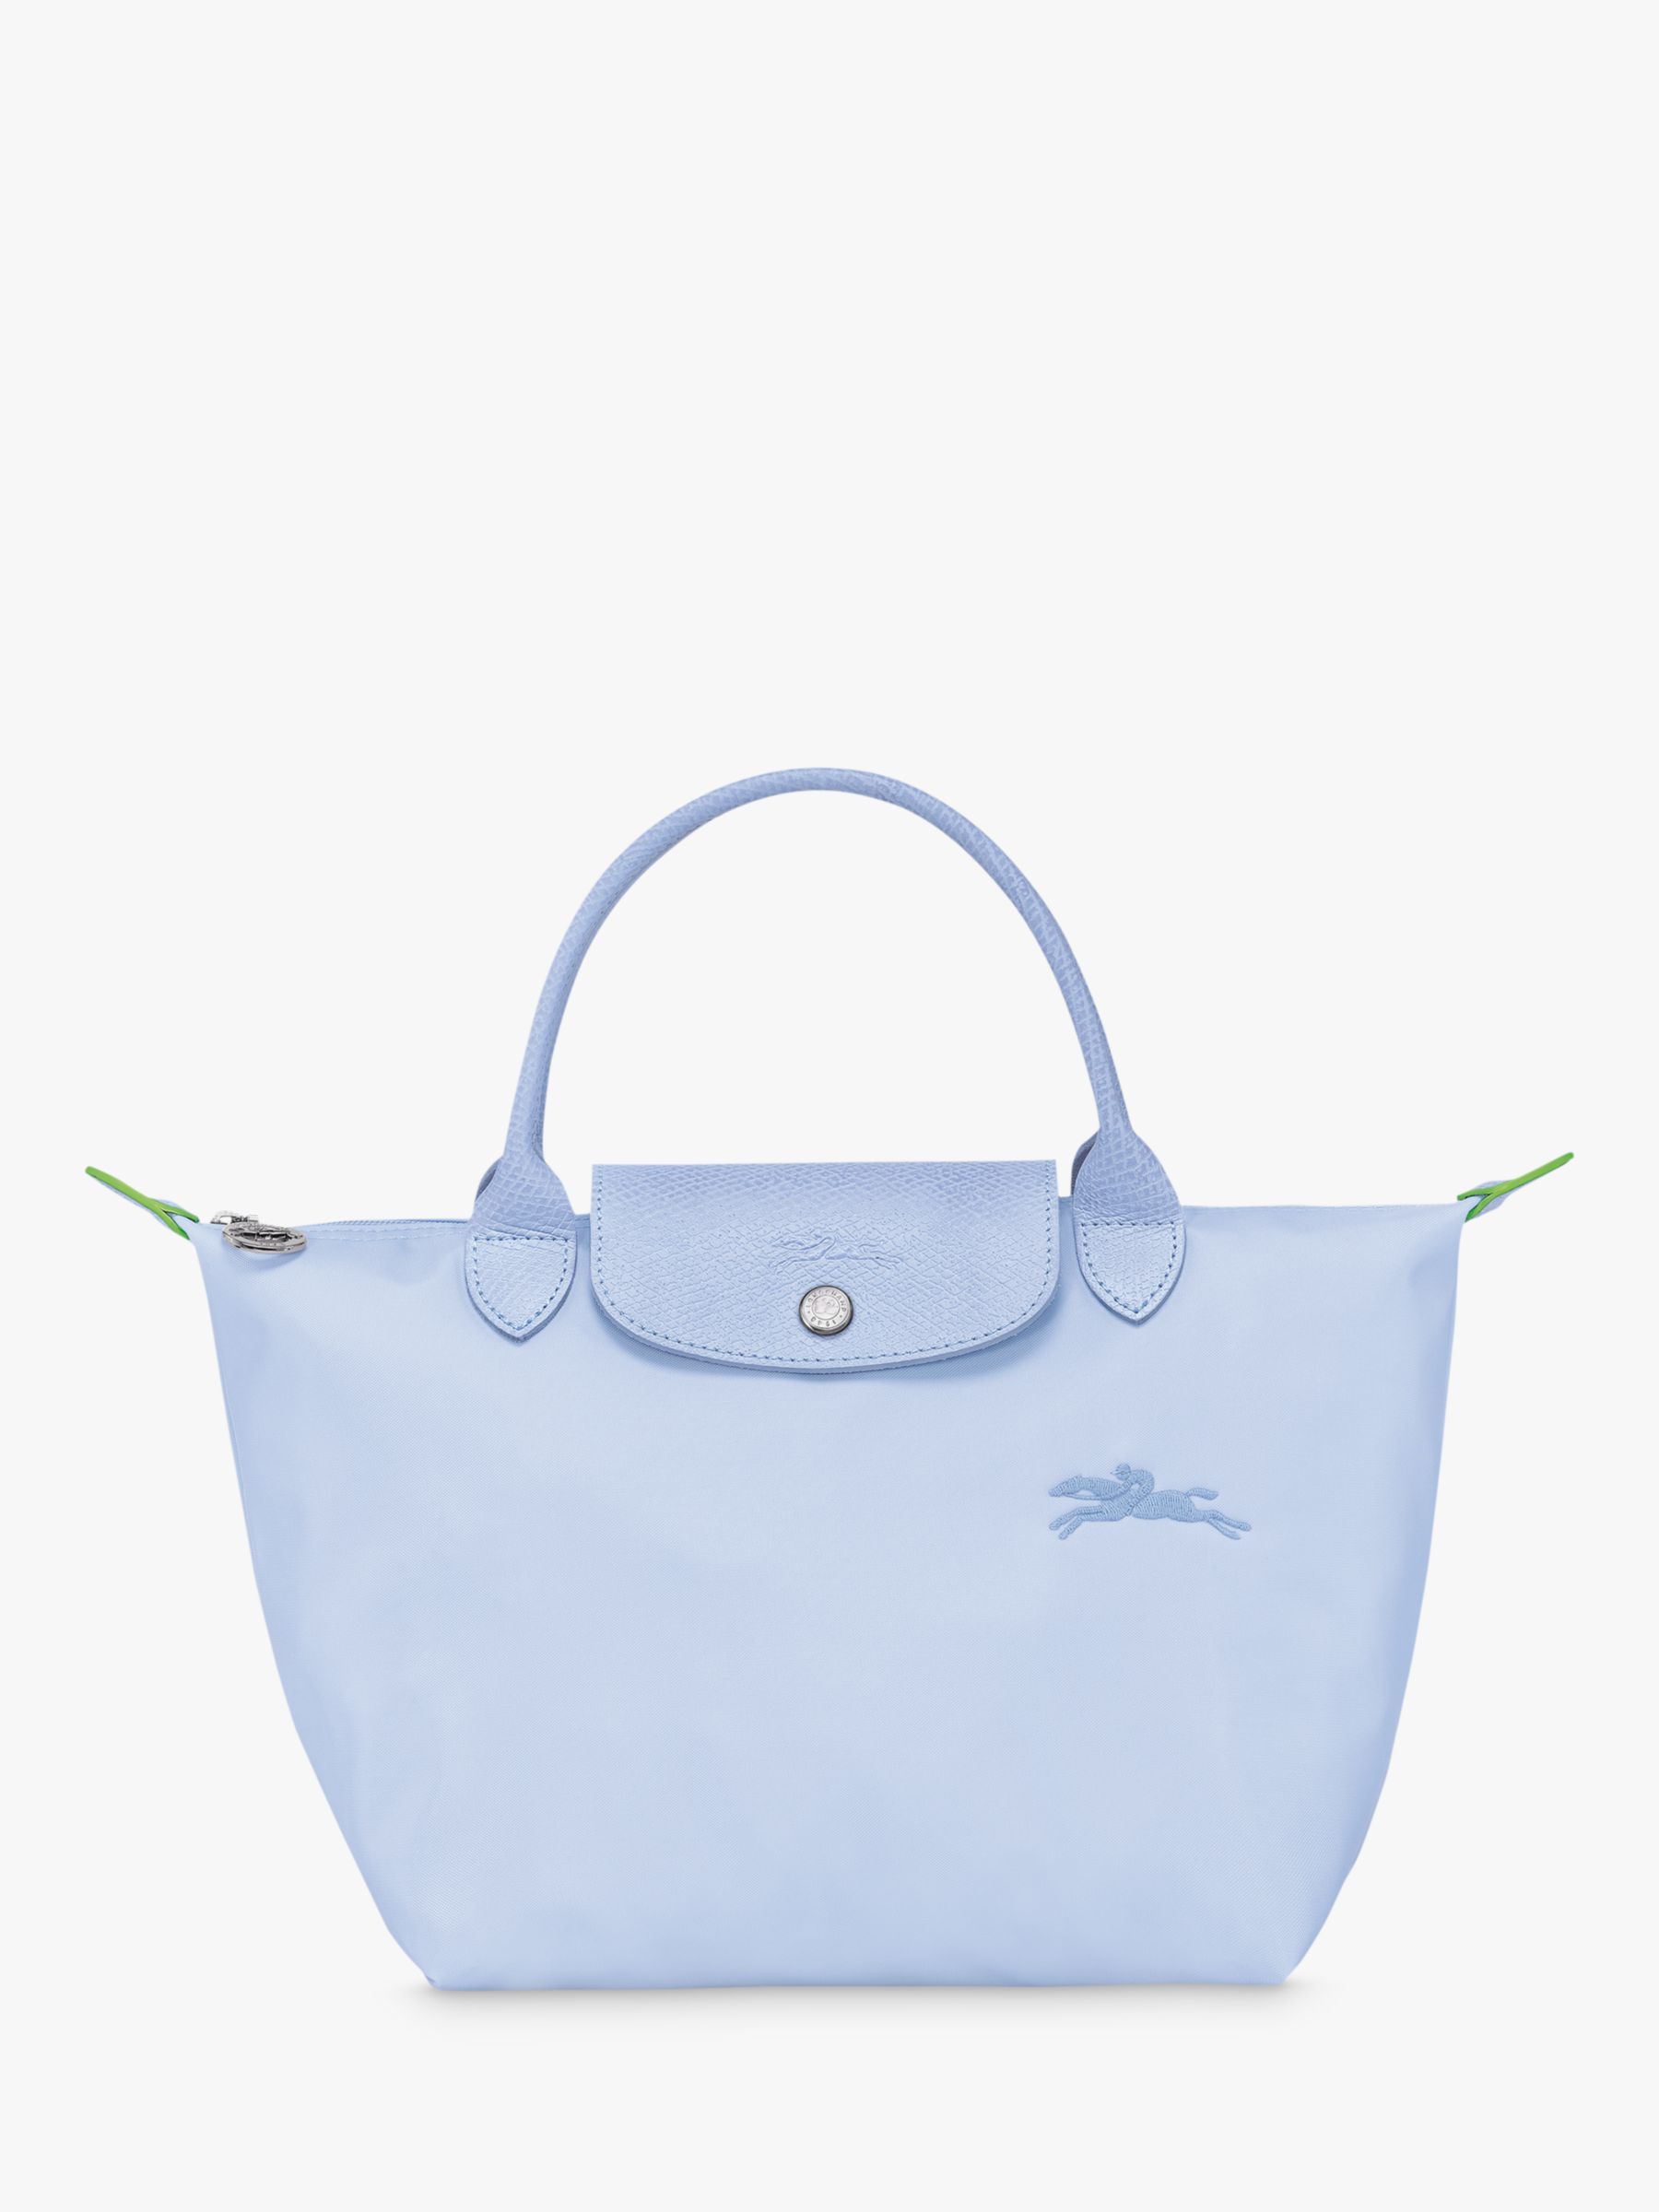 Women's Blue Handbags  John Lewis & Partners